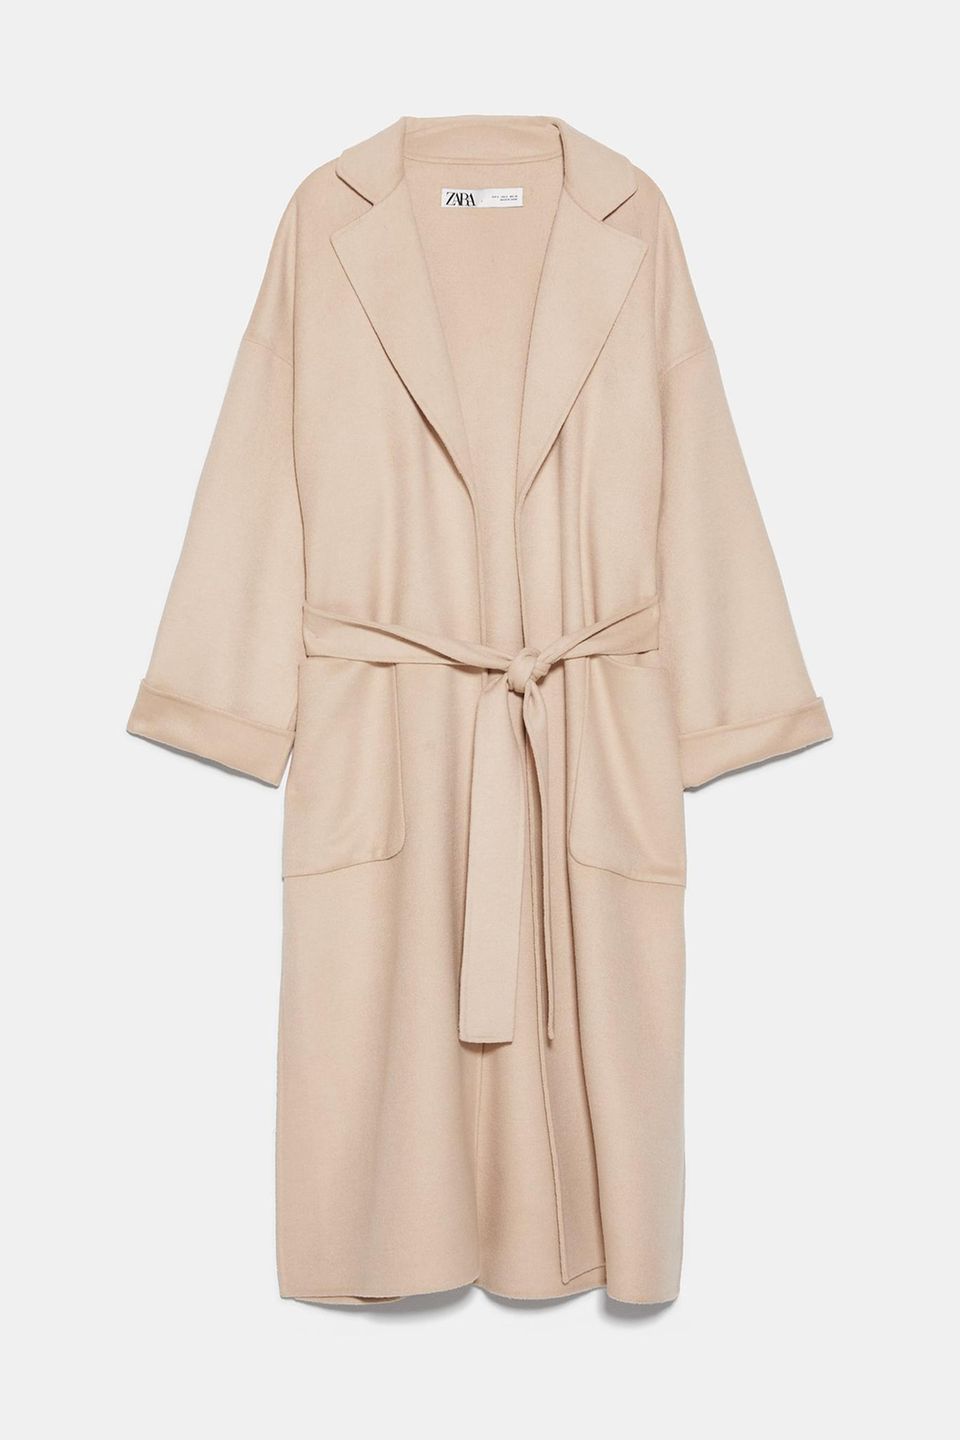 Mode-Klassiker: Mantel in Beige von Zara